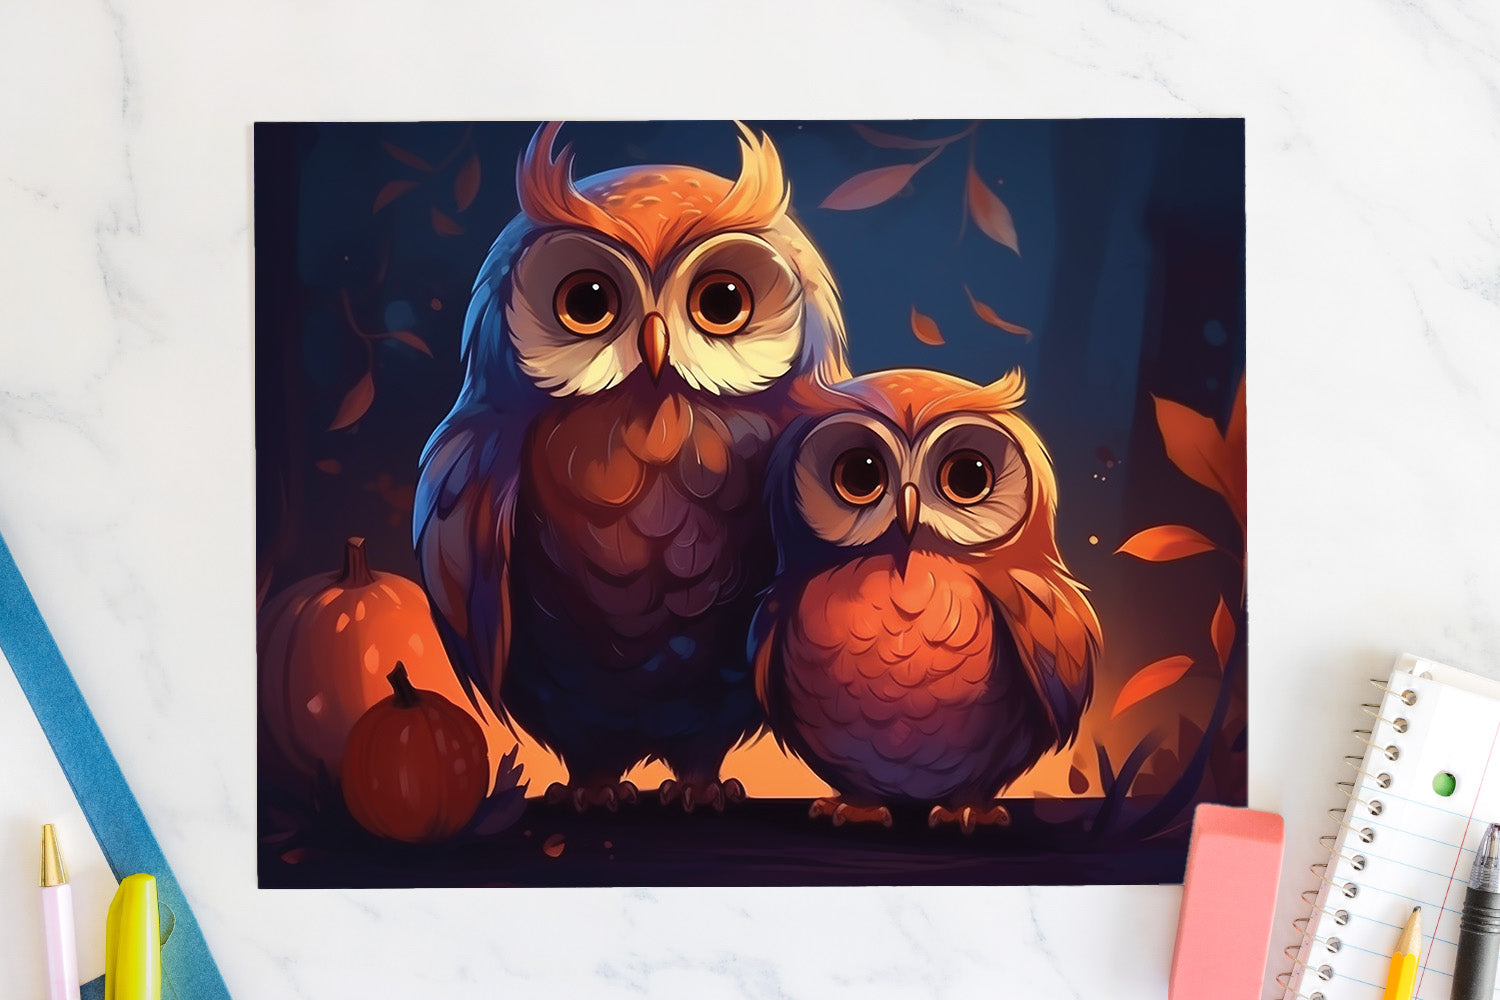 FREE Owls 20oz Tumbler Wrap Sublimation Design Fall Autumn PNG